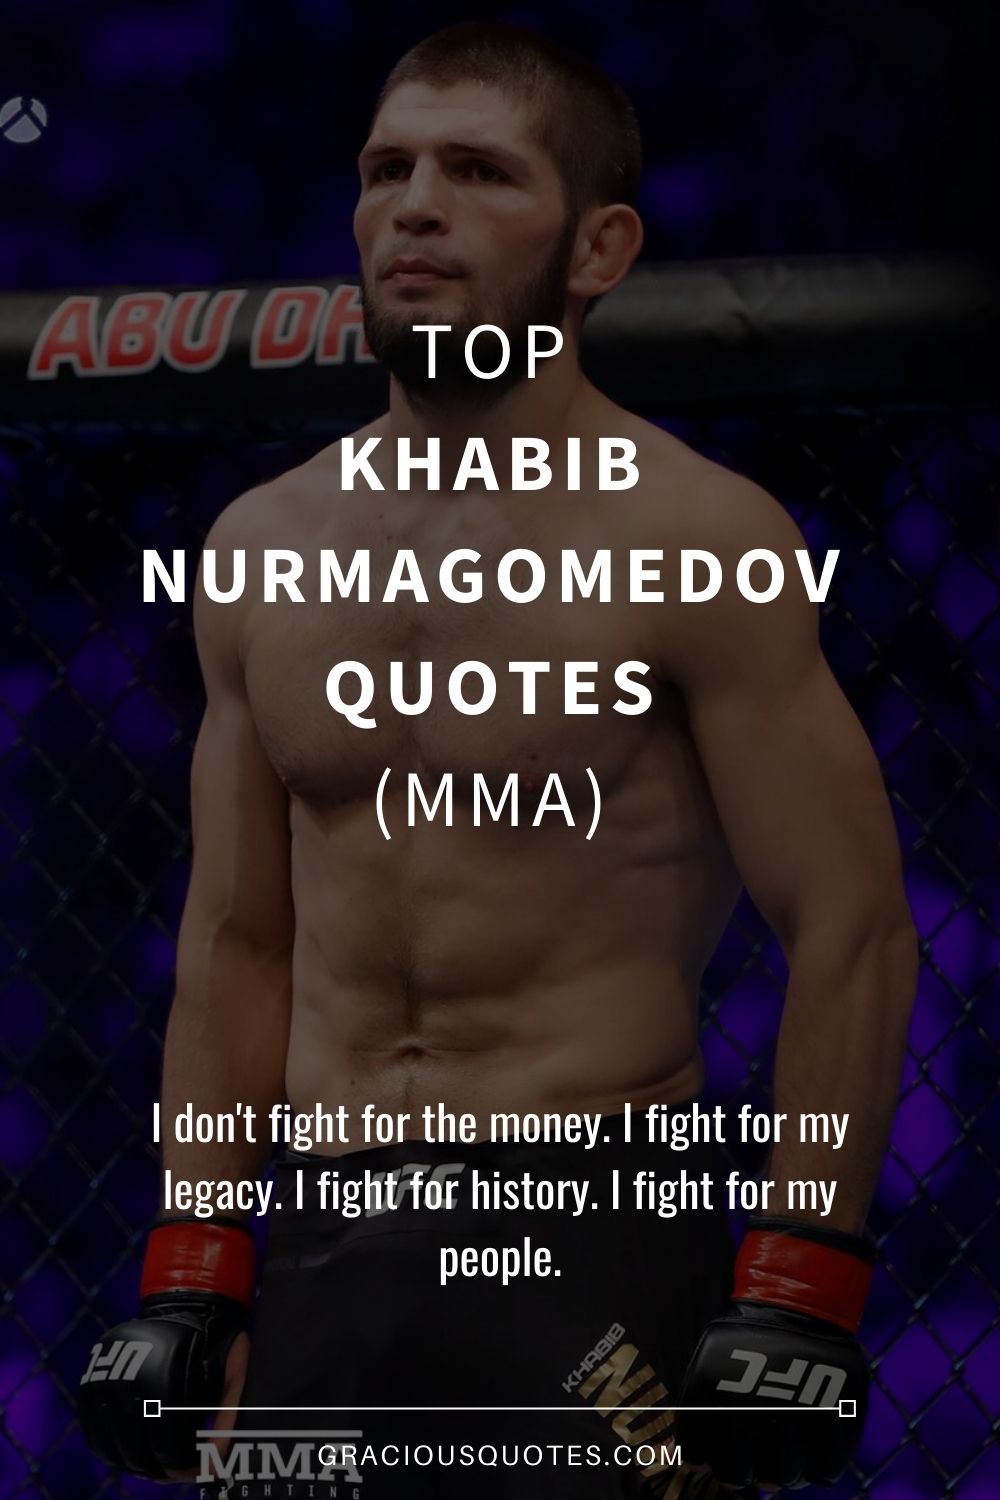 Top Khabib Nurmagomedov Quotes (MMA) - Gracious Quotes